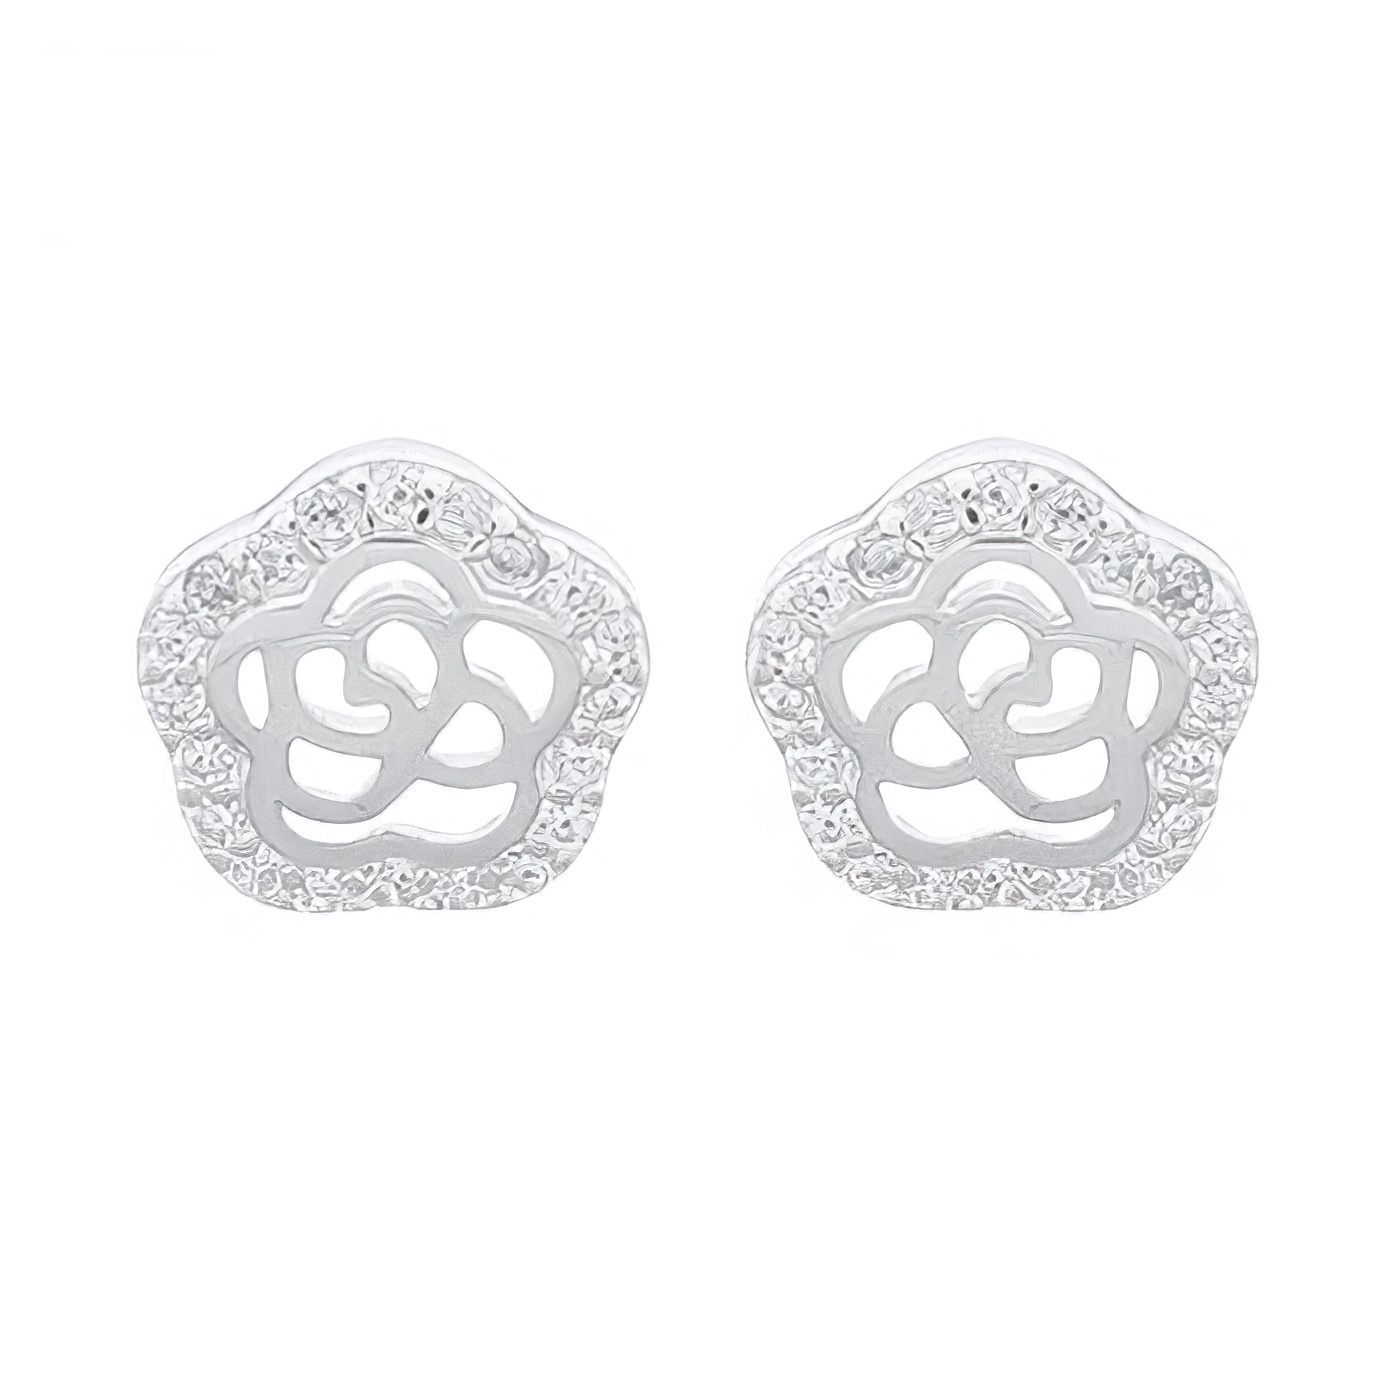 Crystal CZ Rose 925 Silver Stud Earrings by BeYindi 